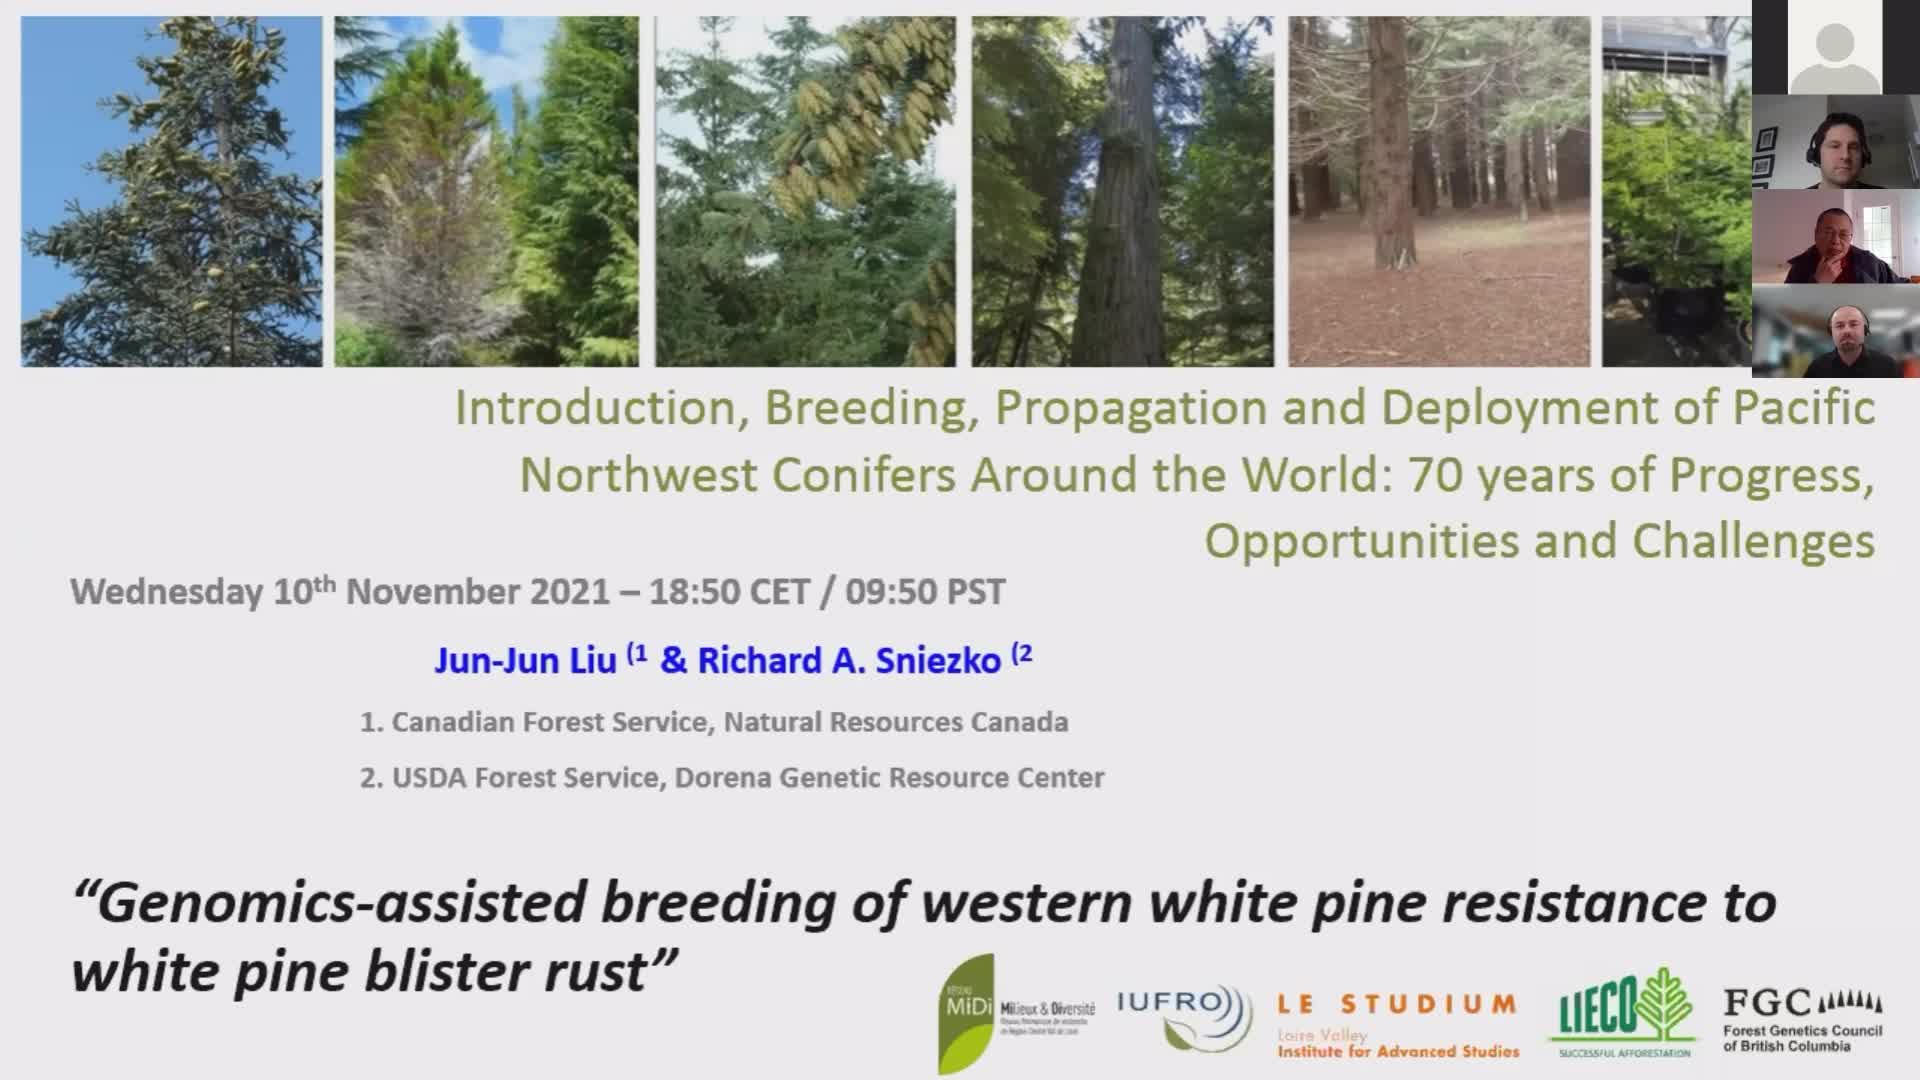 Genomics-assisted breeding of western white pine resistance to white pine blister rust - Jun-Jun Liu